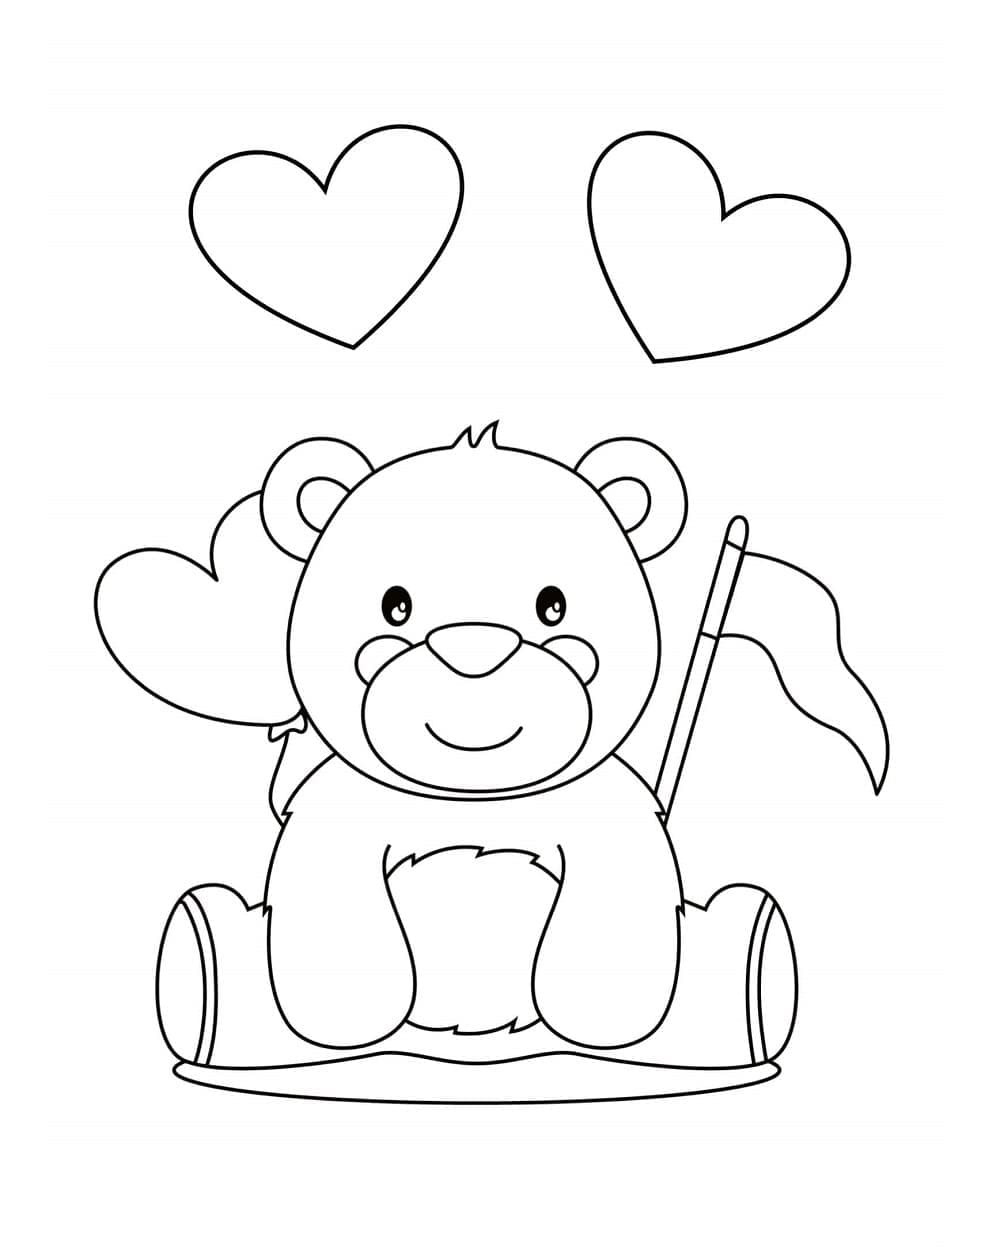 Printable Adorable Teddy Bear Coloring Page